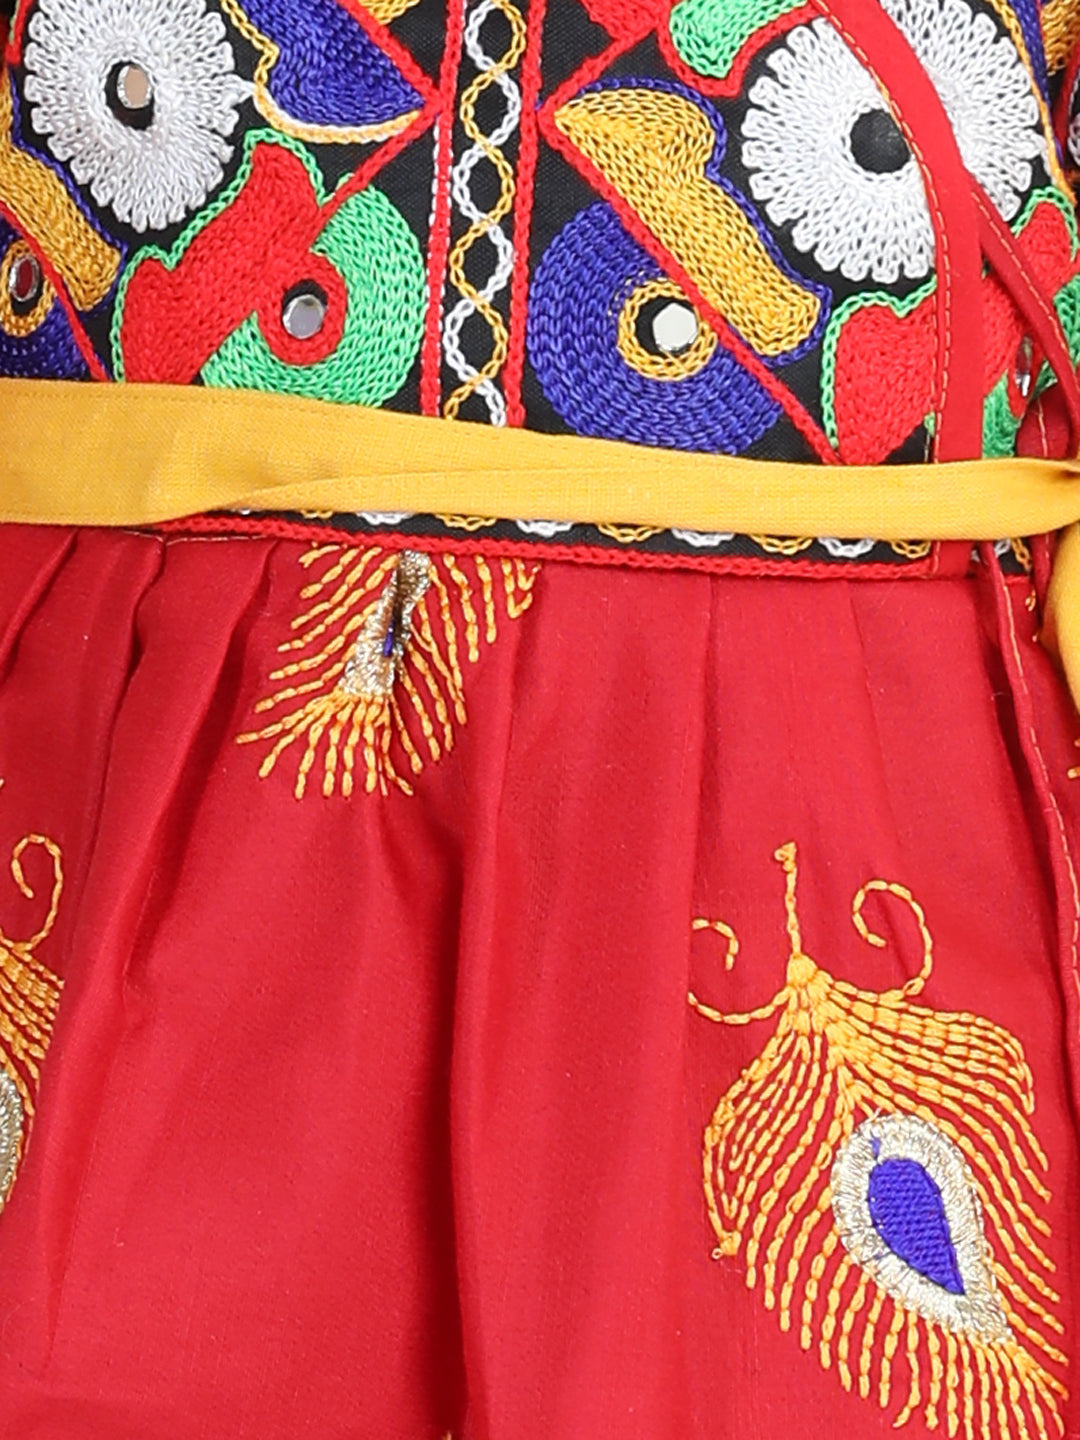 BownBee Embroidered Dhoti Top Radha Dress with Mukut, Bansuri and Patka for Girls-Red